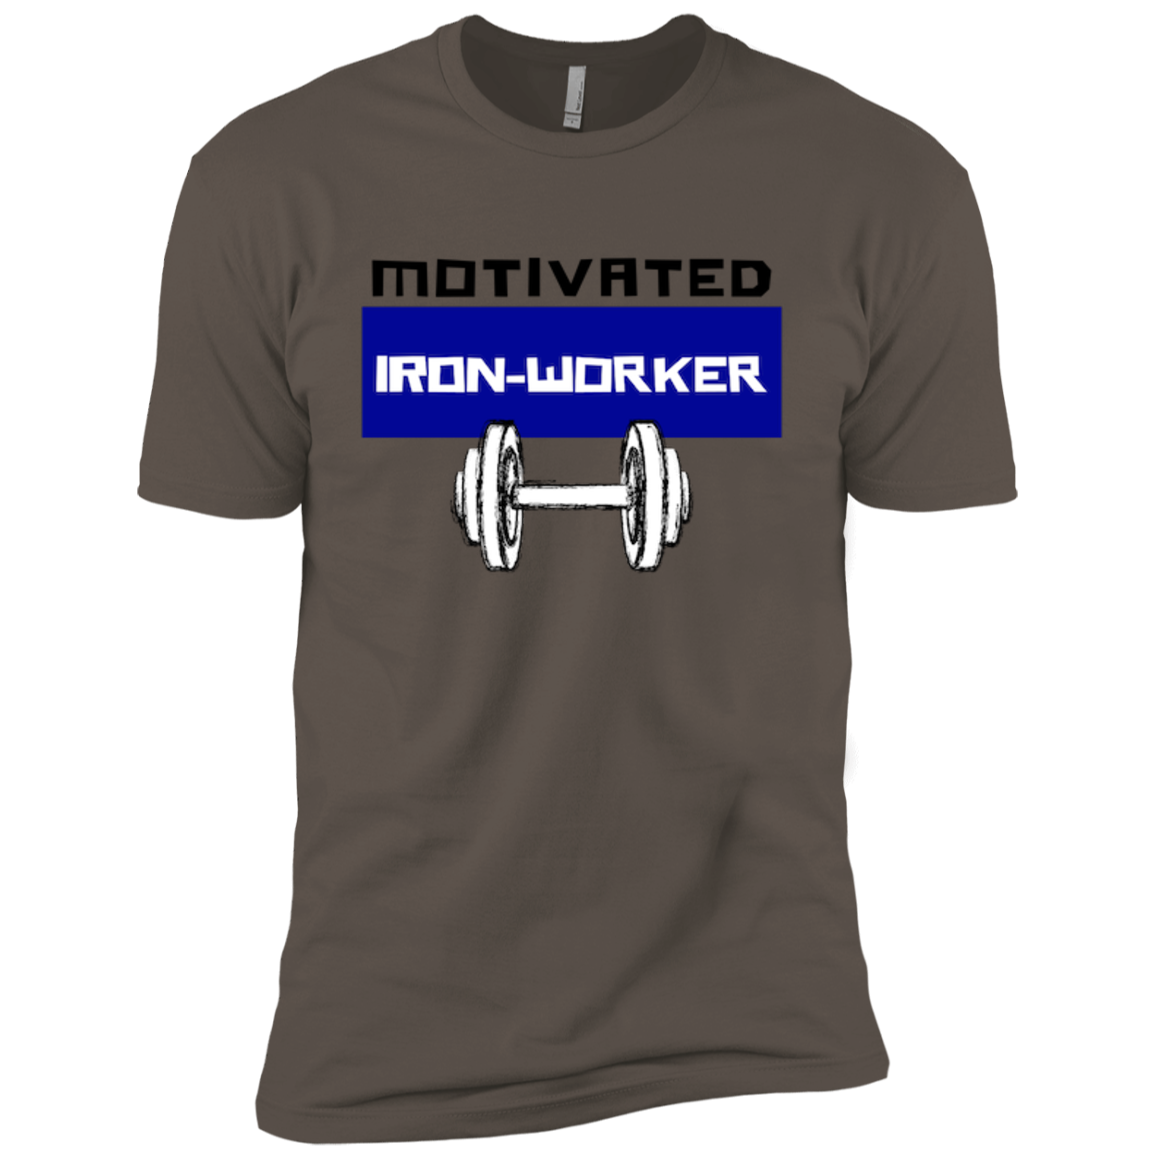 Motivated Iron Worker T-Shirt